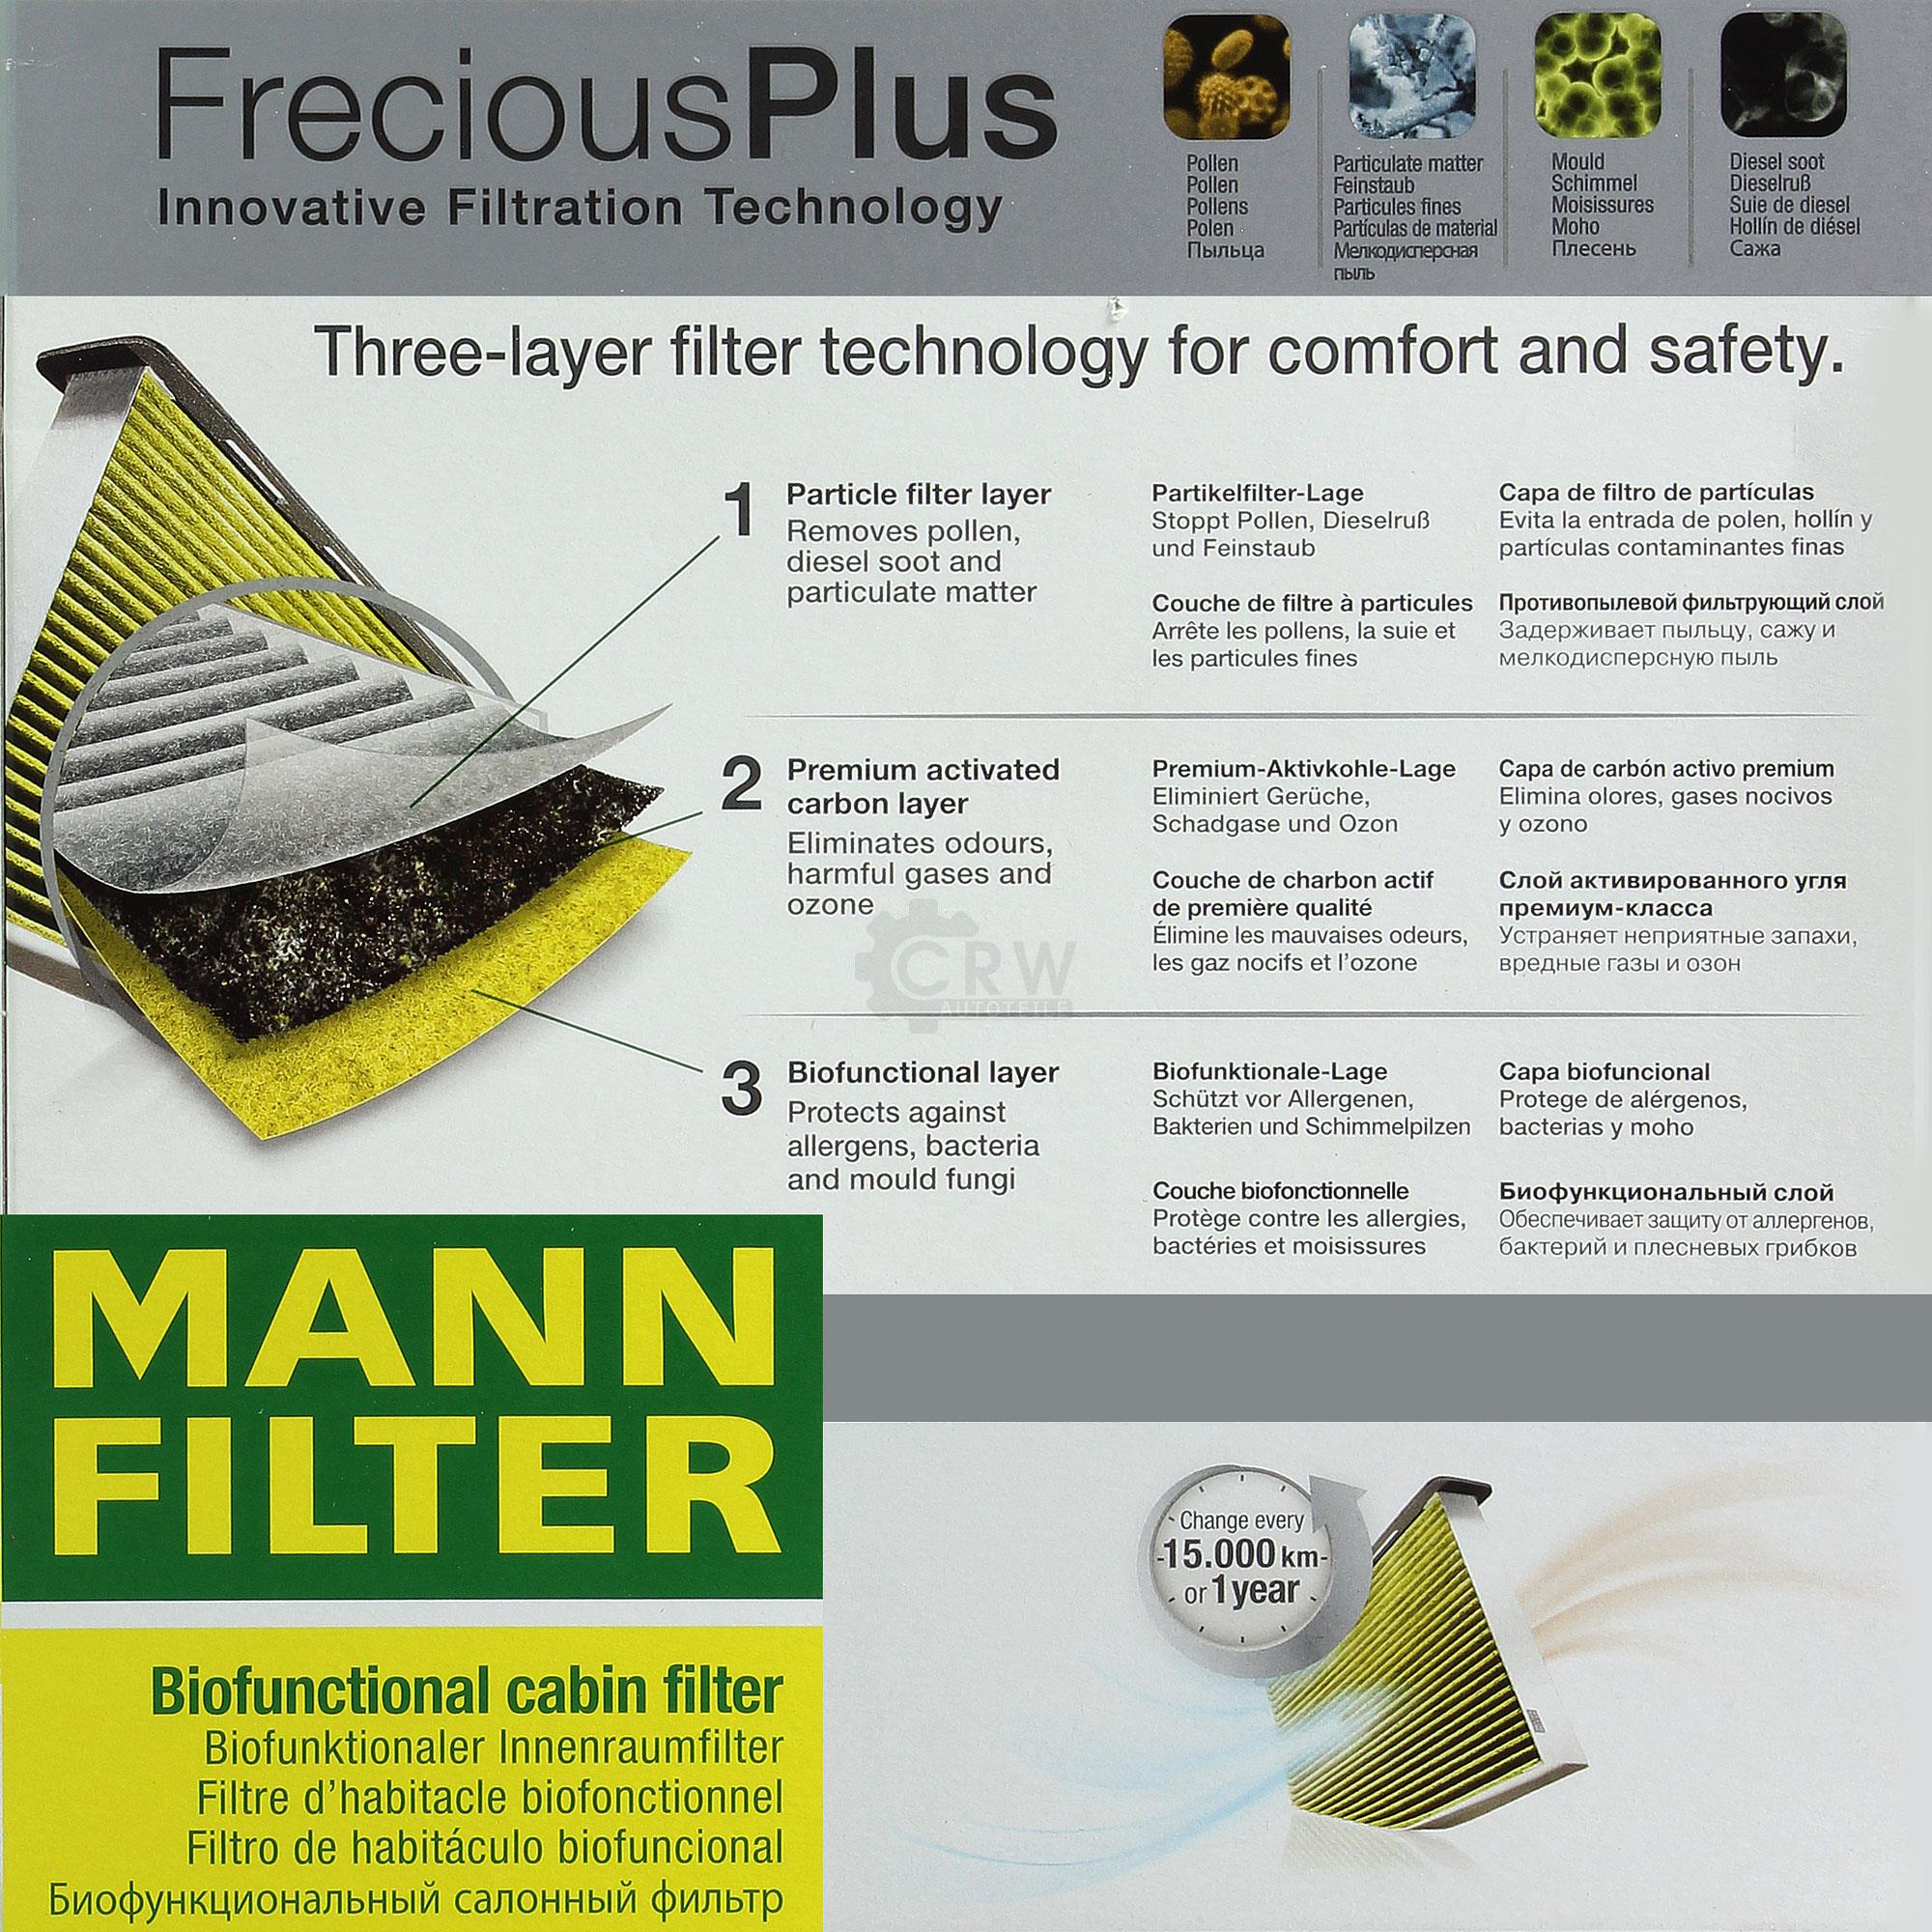 MANN-Filter Innenraumfilter Biofunctional für Allergiker FP 2440